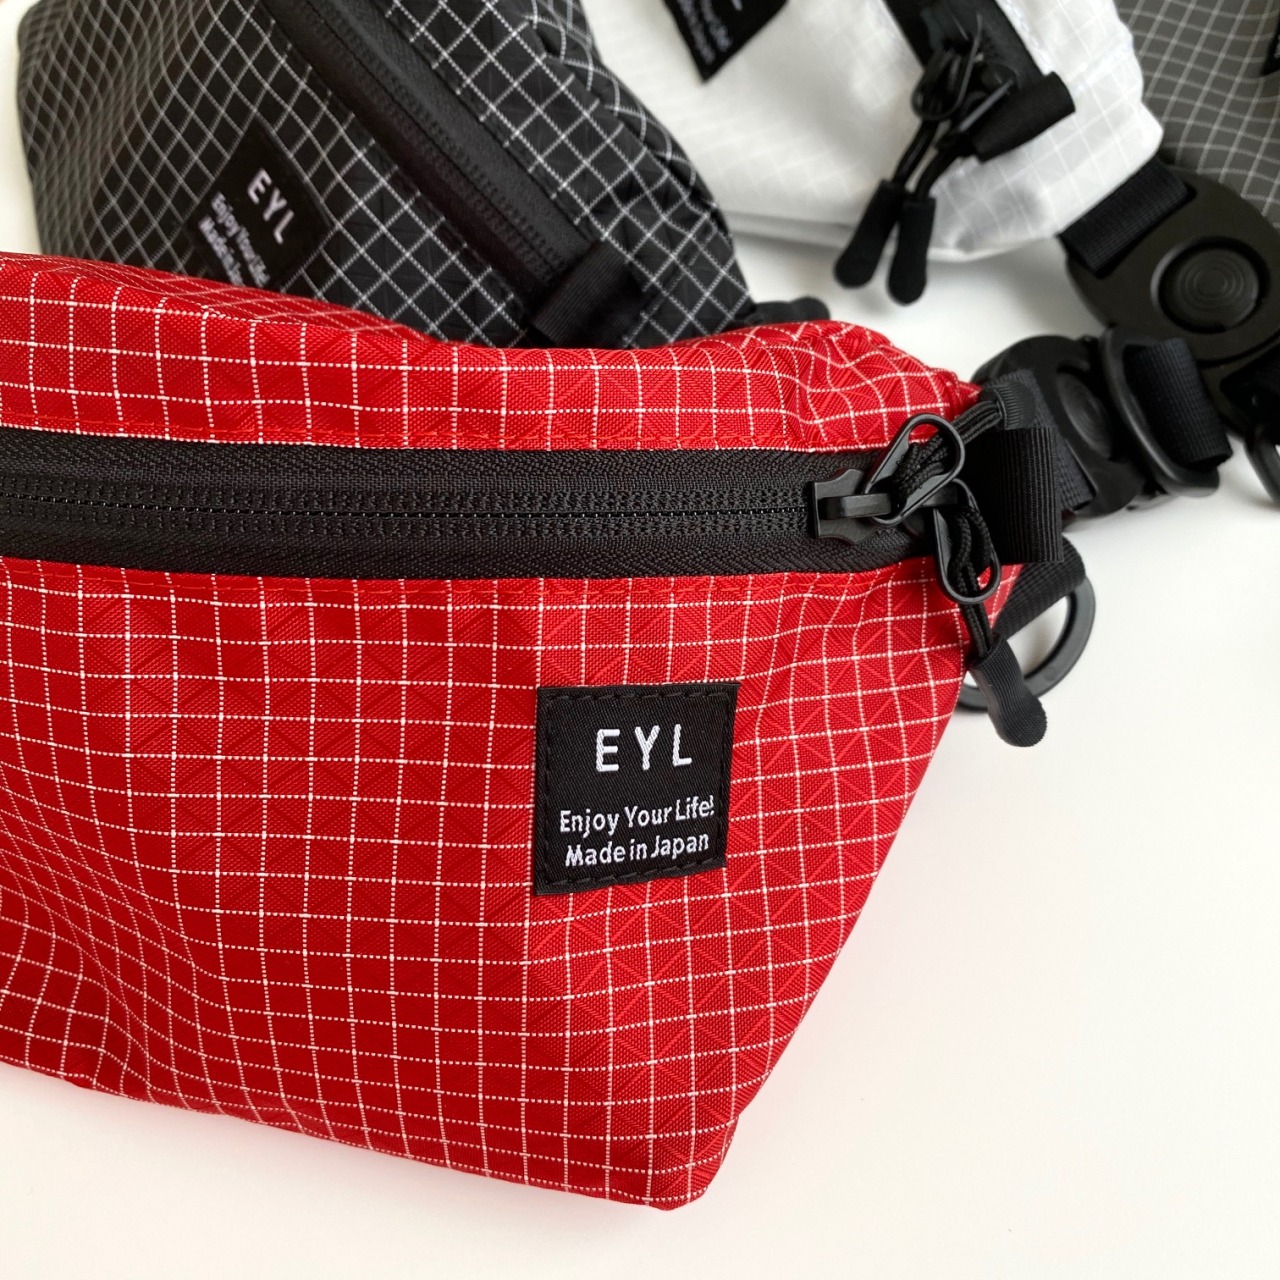 EYL - Enjoy Your Life! — WAIST BAG 小ぶりのウェストバッグです。